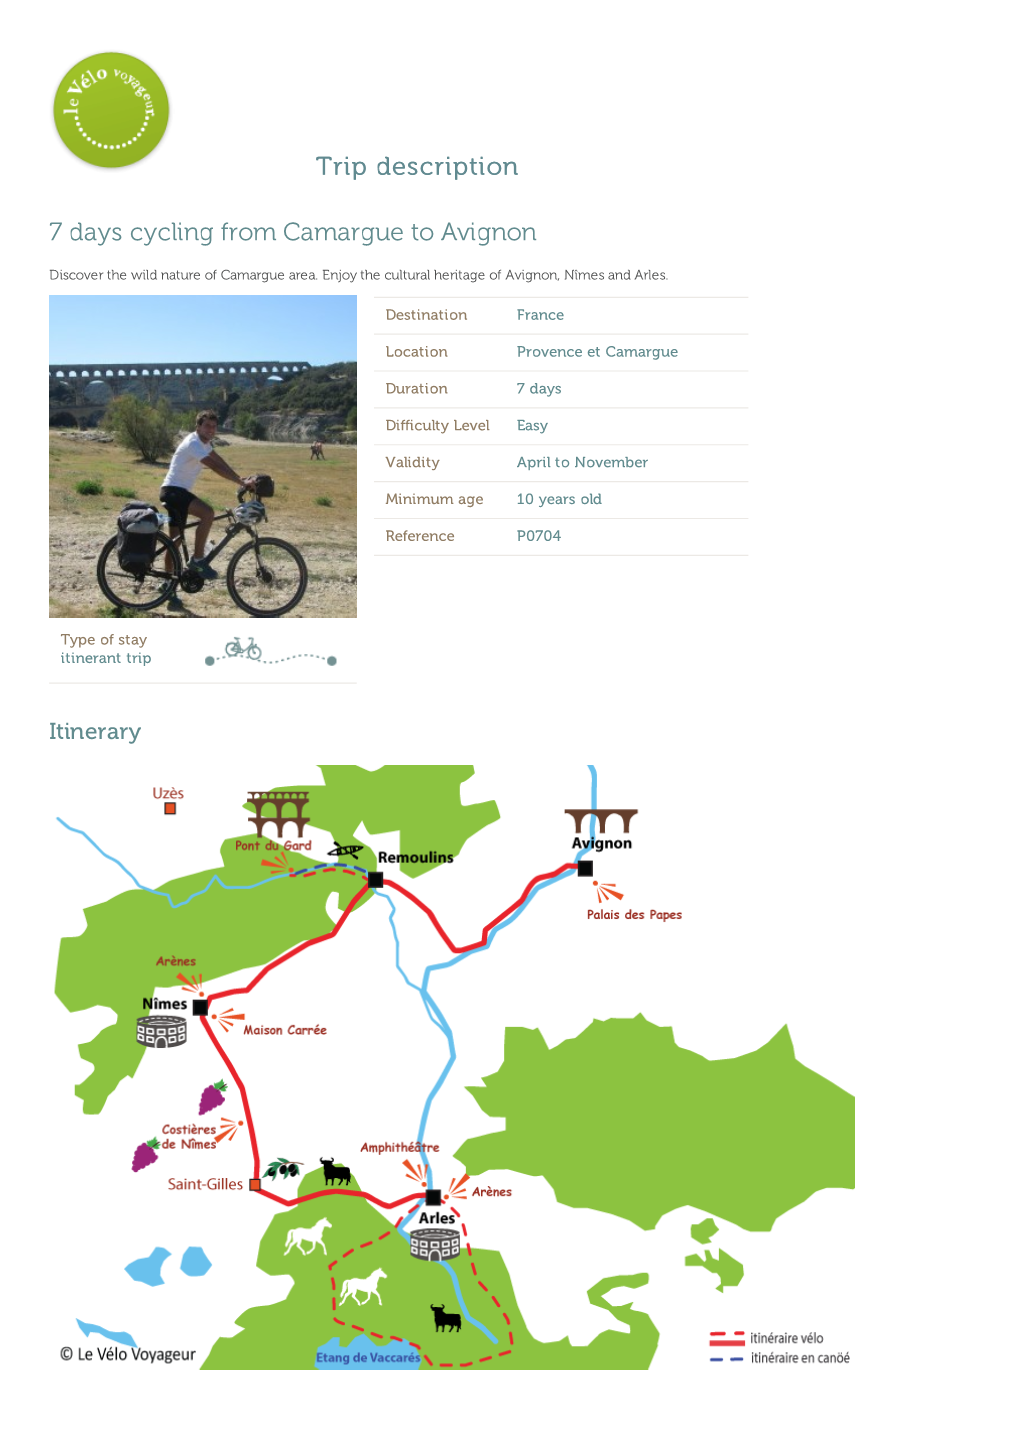 Trip Description 7 Days Cycling from Camargue to Avignon